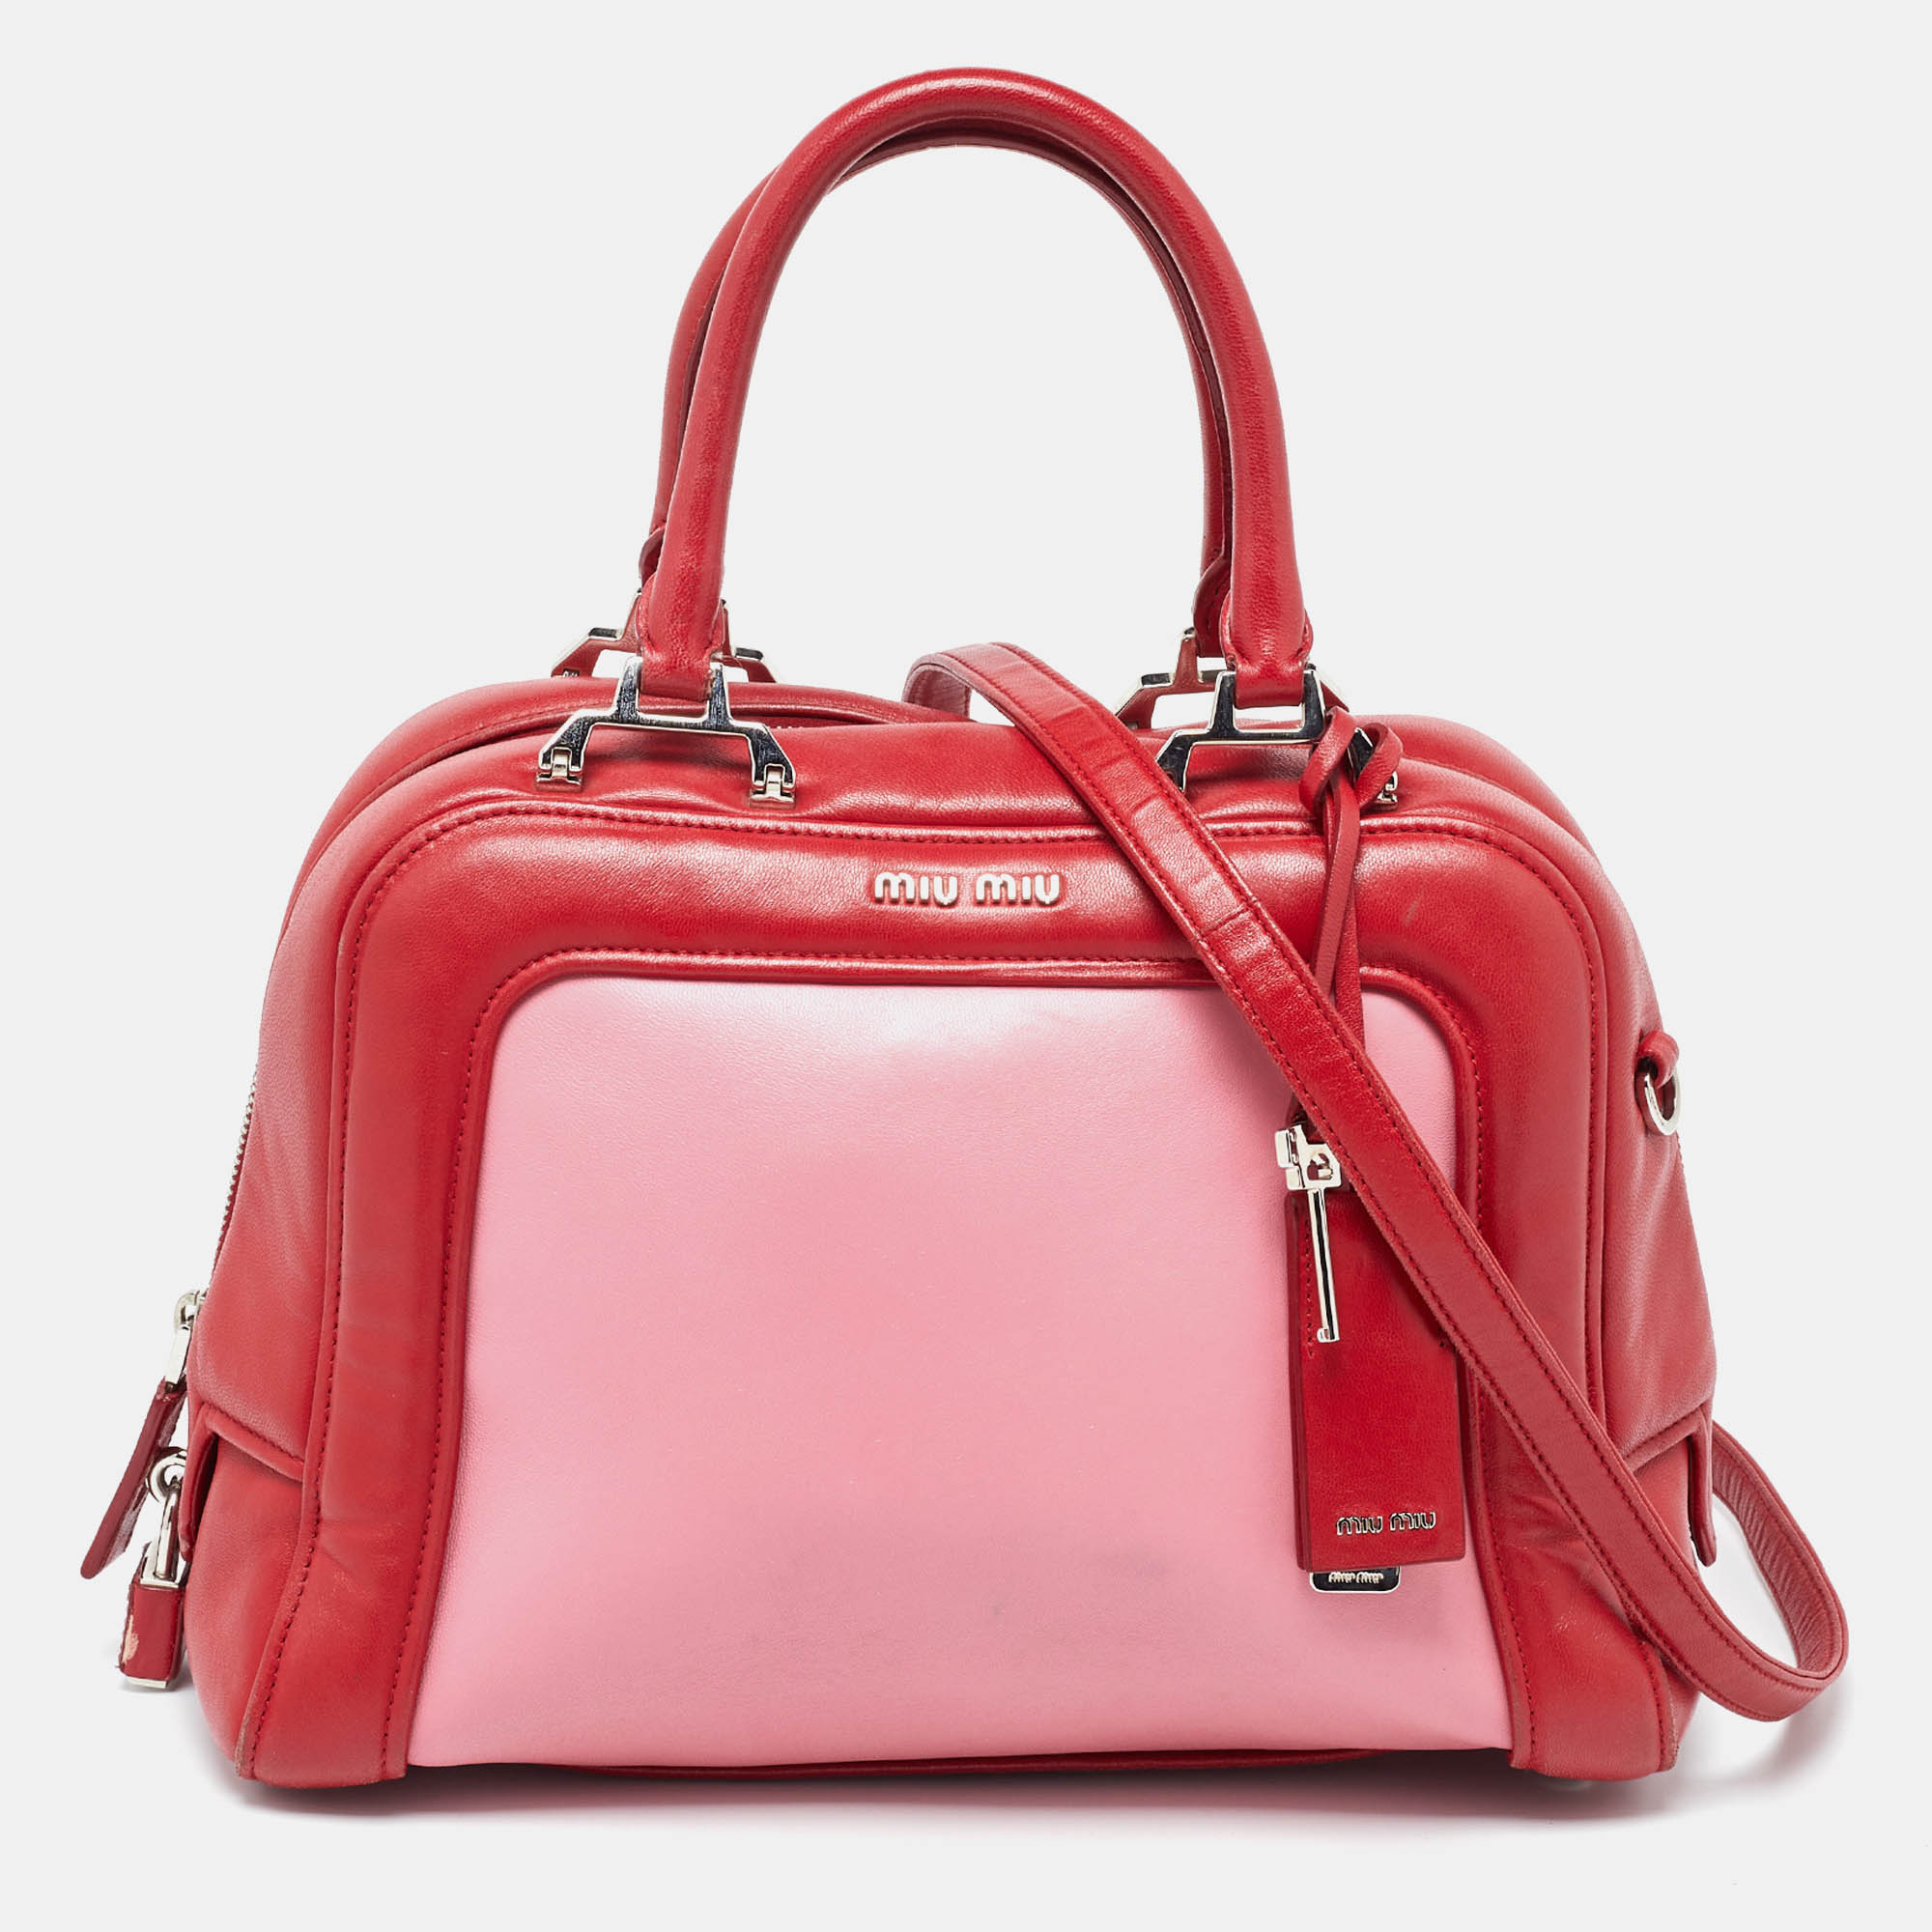 Miu miu red/pink leather zip bag